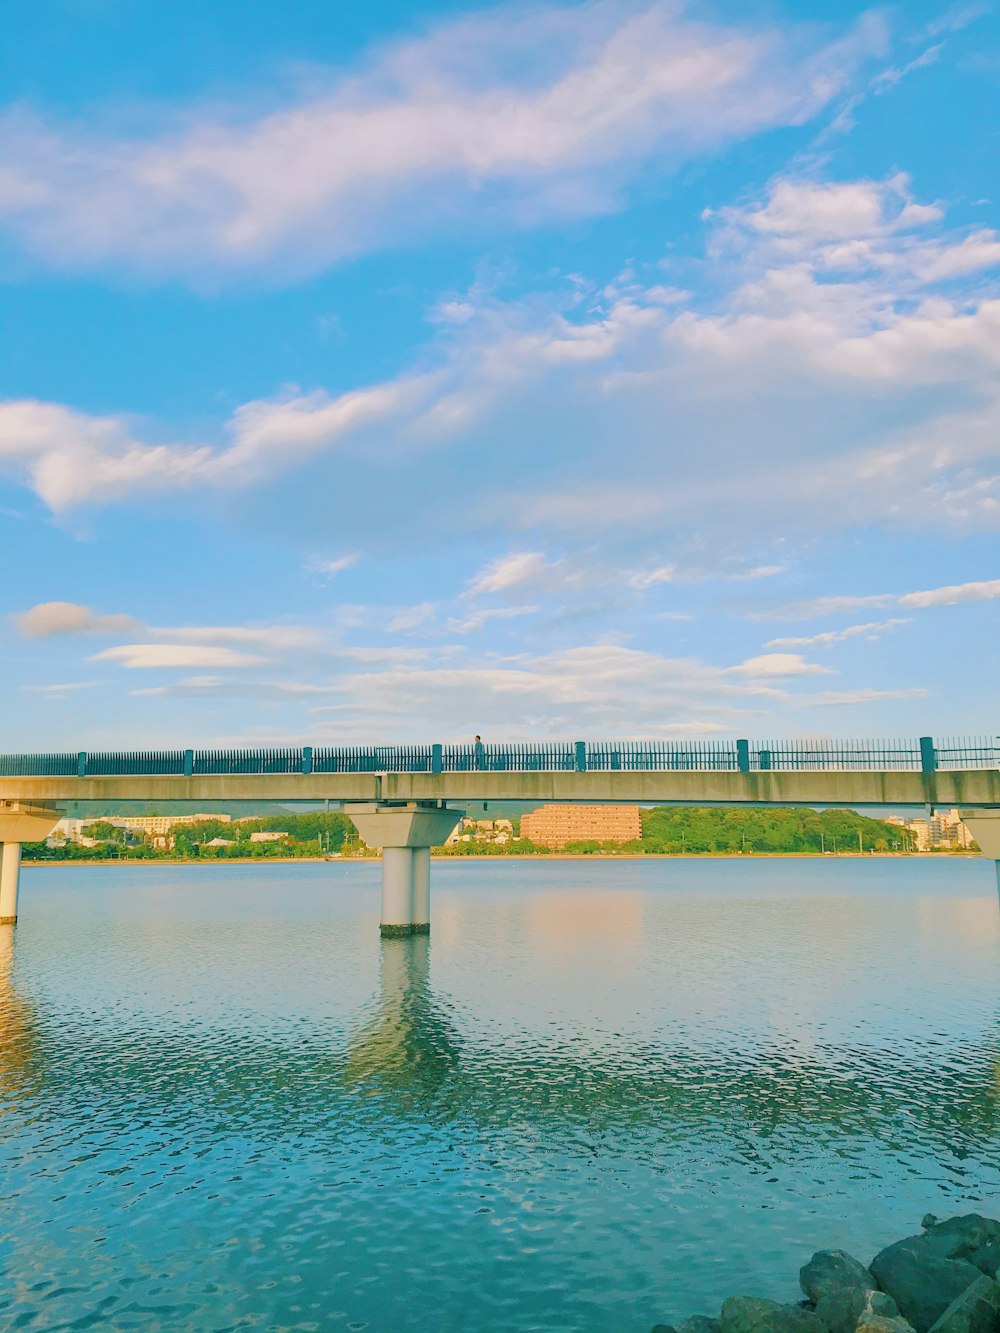 gray concrete bridge over river under blue sky during daytime